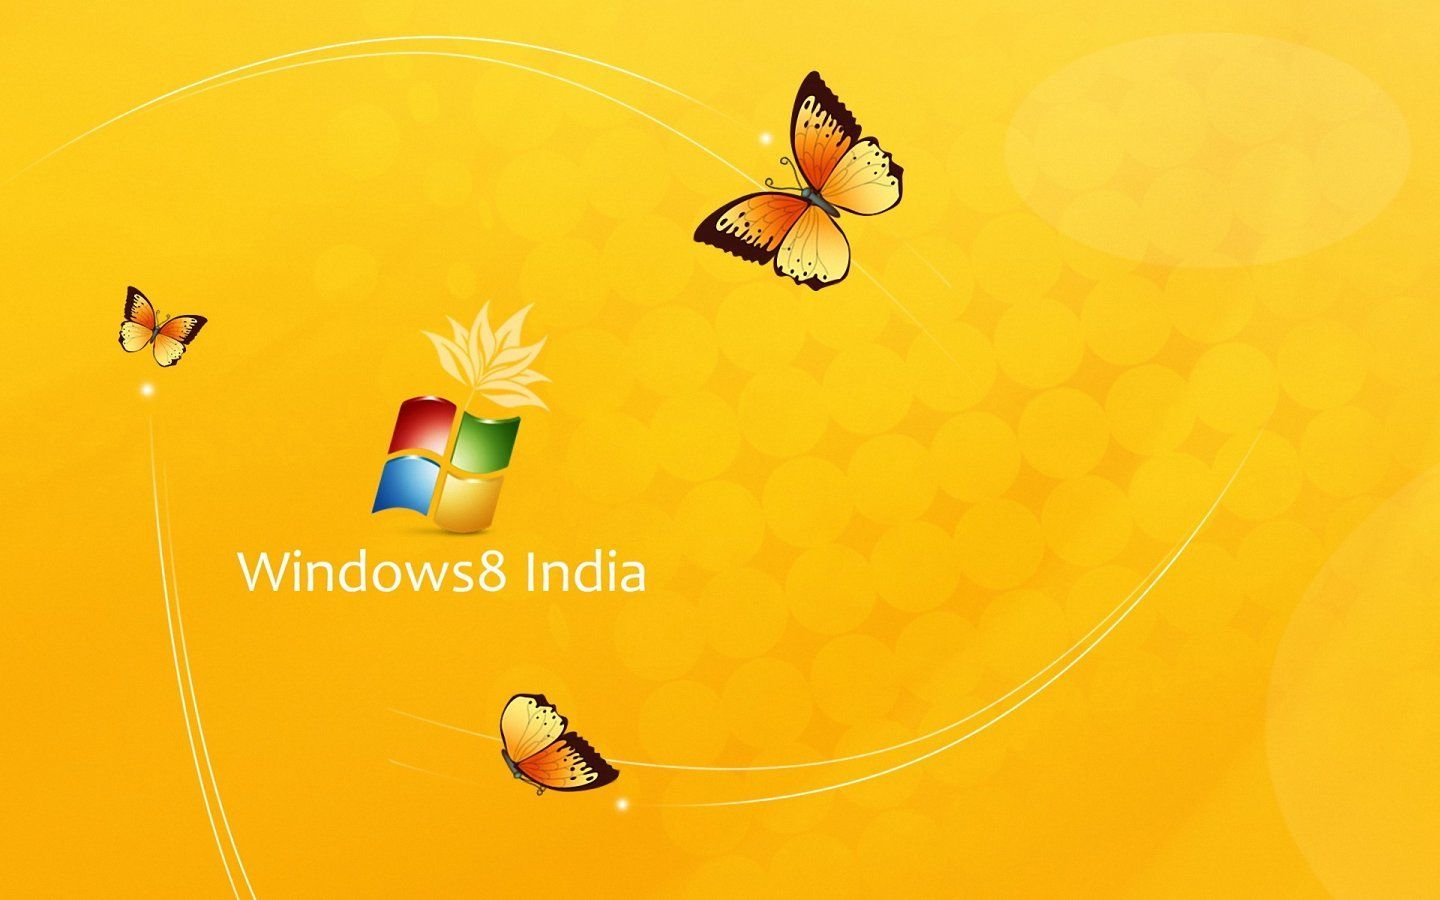 Windows 8 HD Wallpaper 1440x900 Wallpapers, 1440x900 Wallpapers